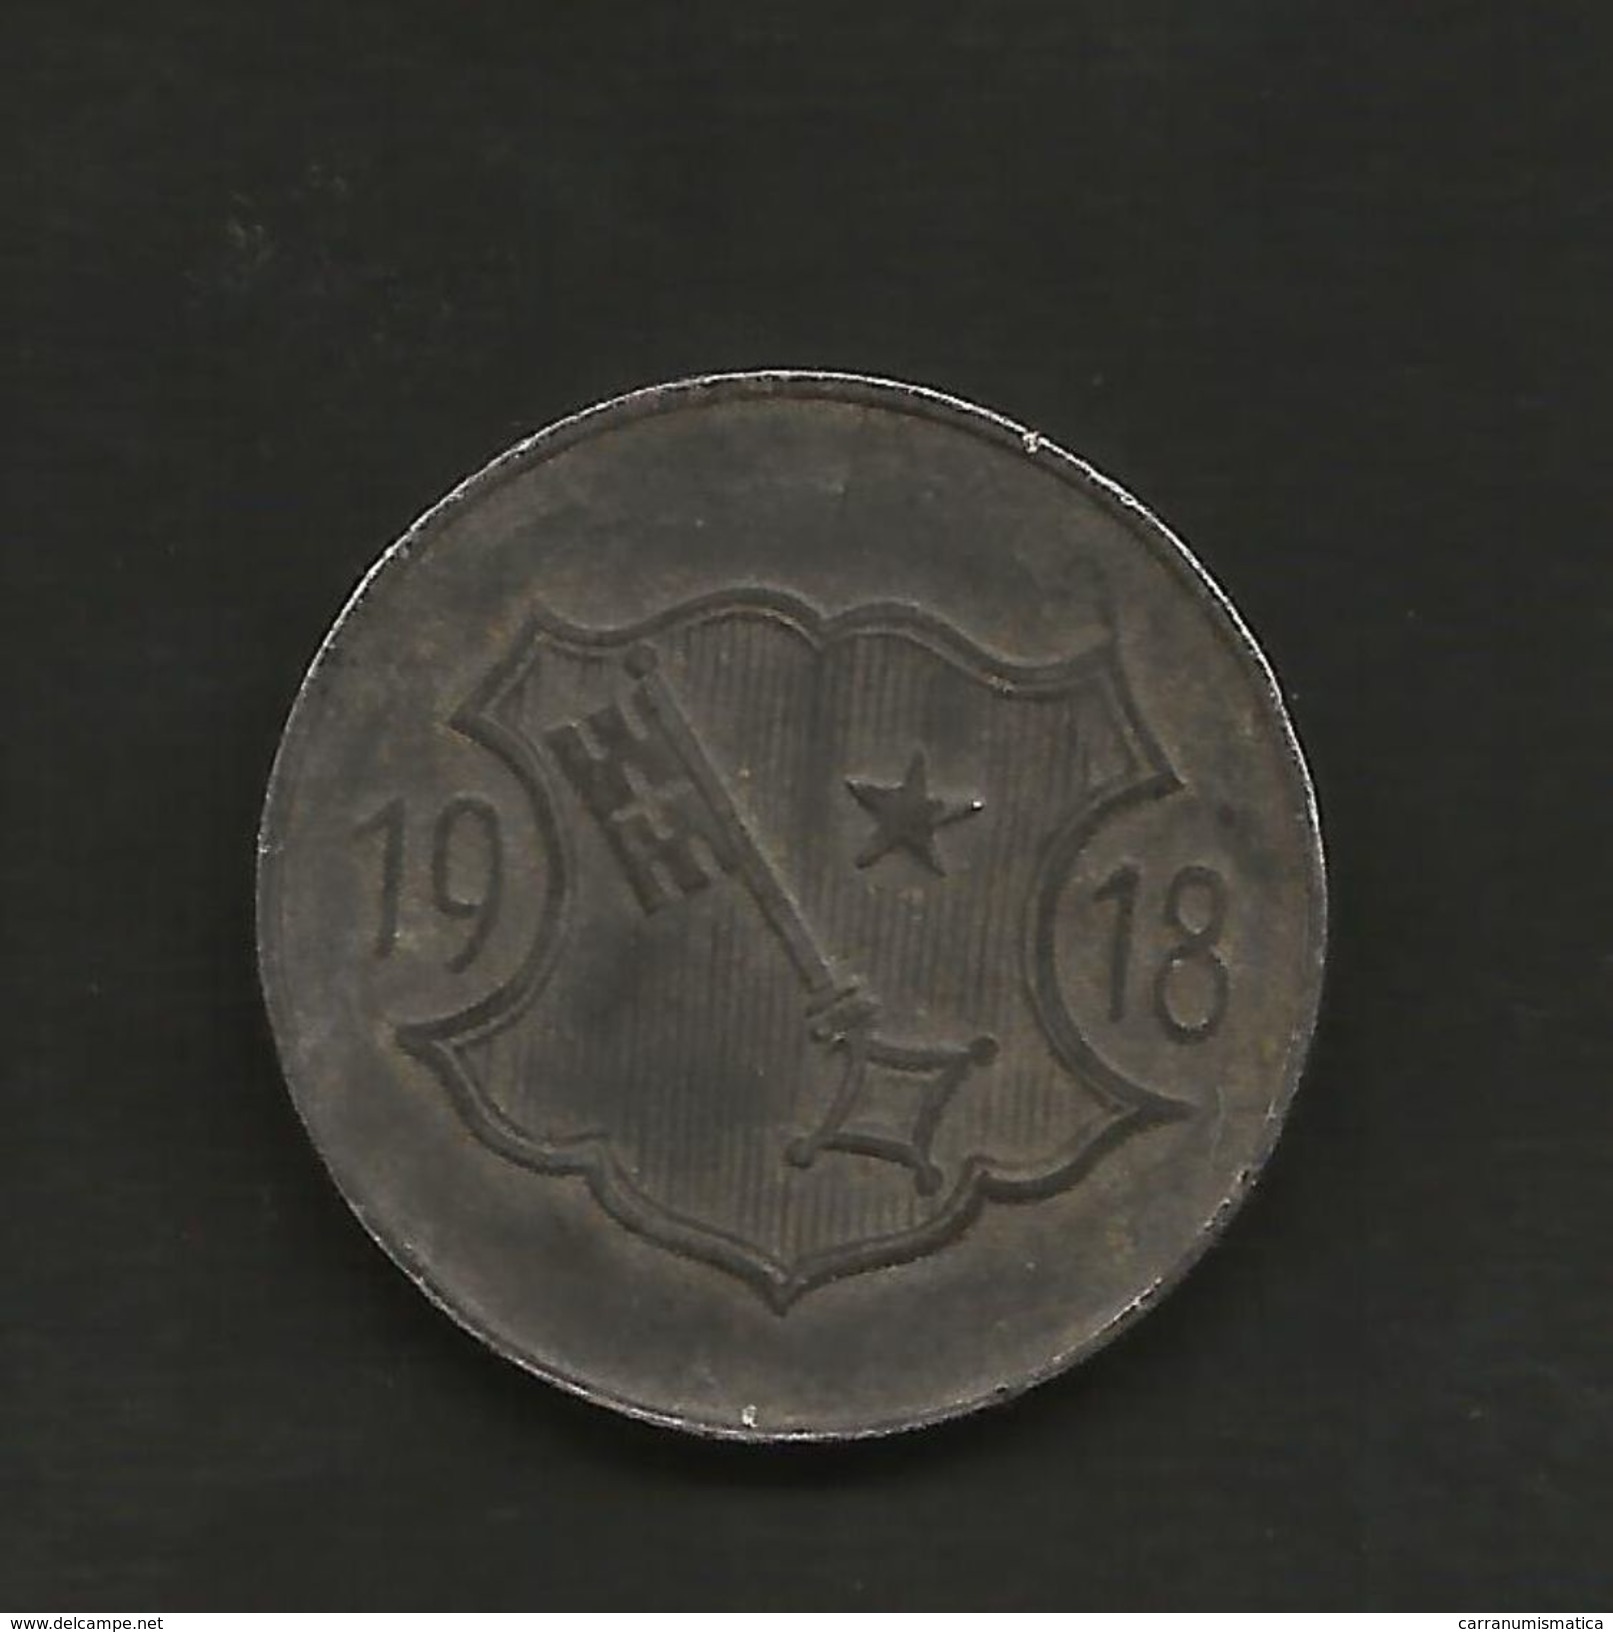 DEUTSCHLAND / GERMANY - NOTGELD - Stadt WORMS - 10 Pfennig (1918) Zink / Zinc / Zinco - Monétaires/De Nécessité